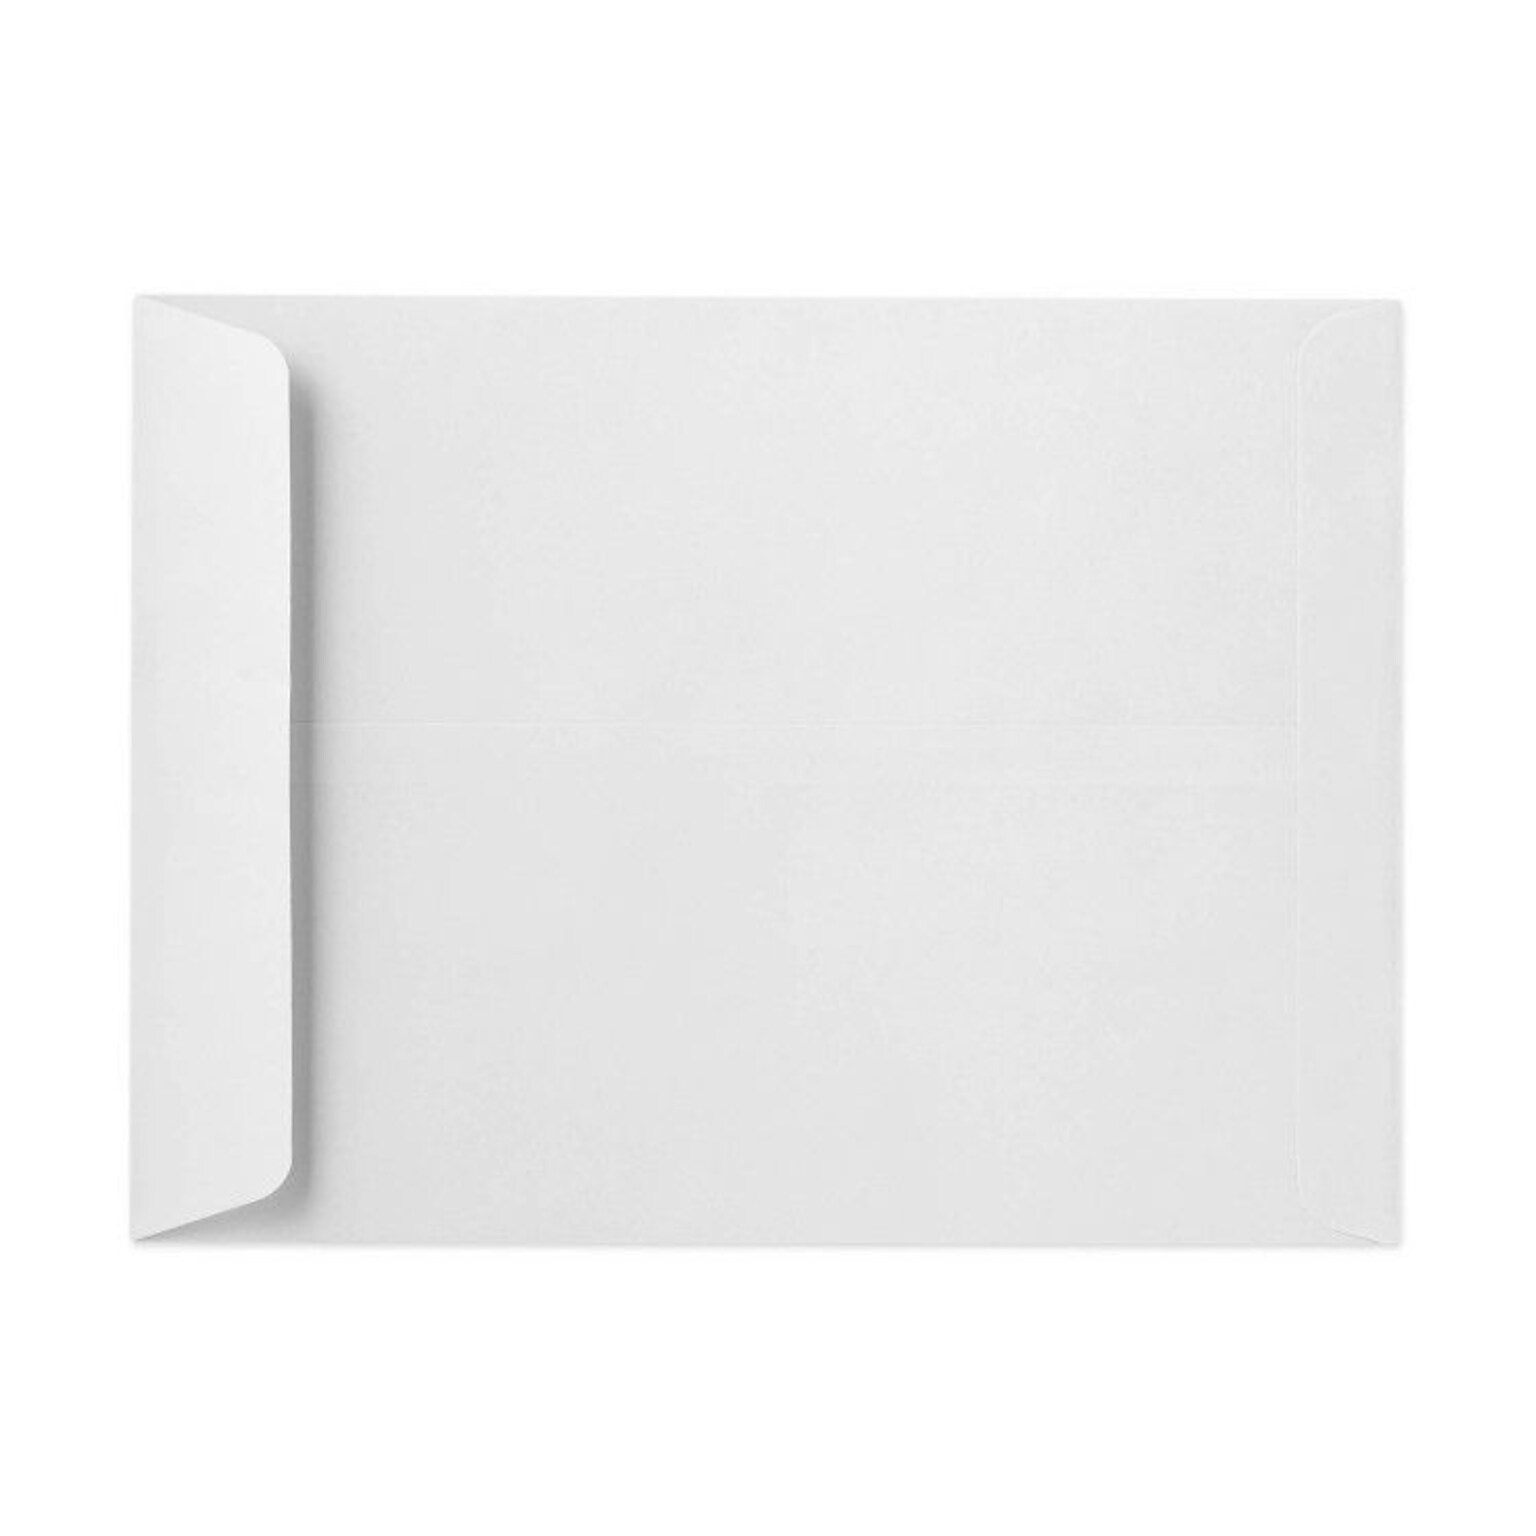 LUX 28lbs. 11 x 17 Open End Flap Jumbo Envelopes, Bright White, 500/BX